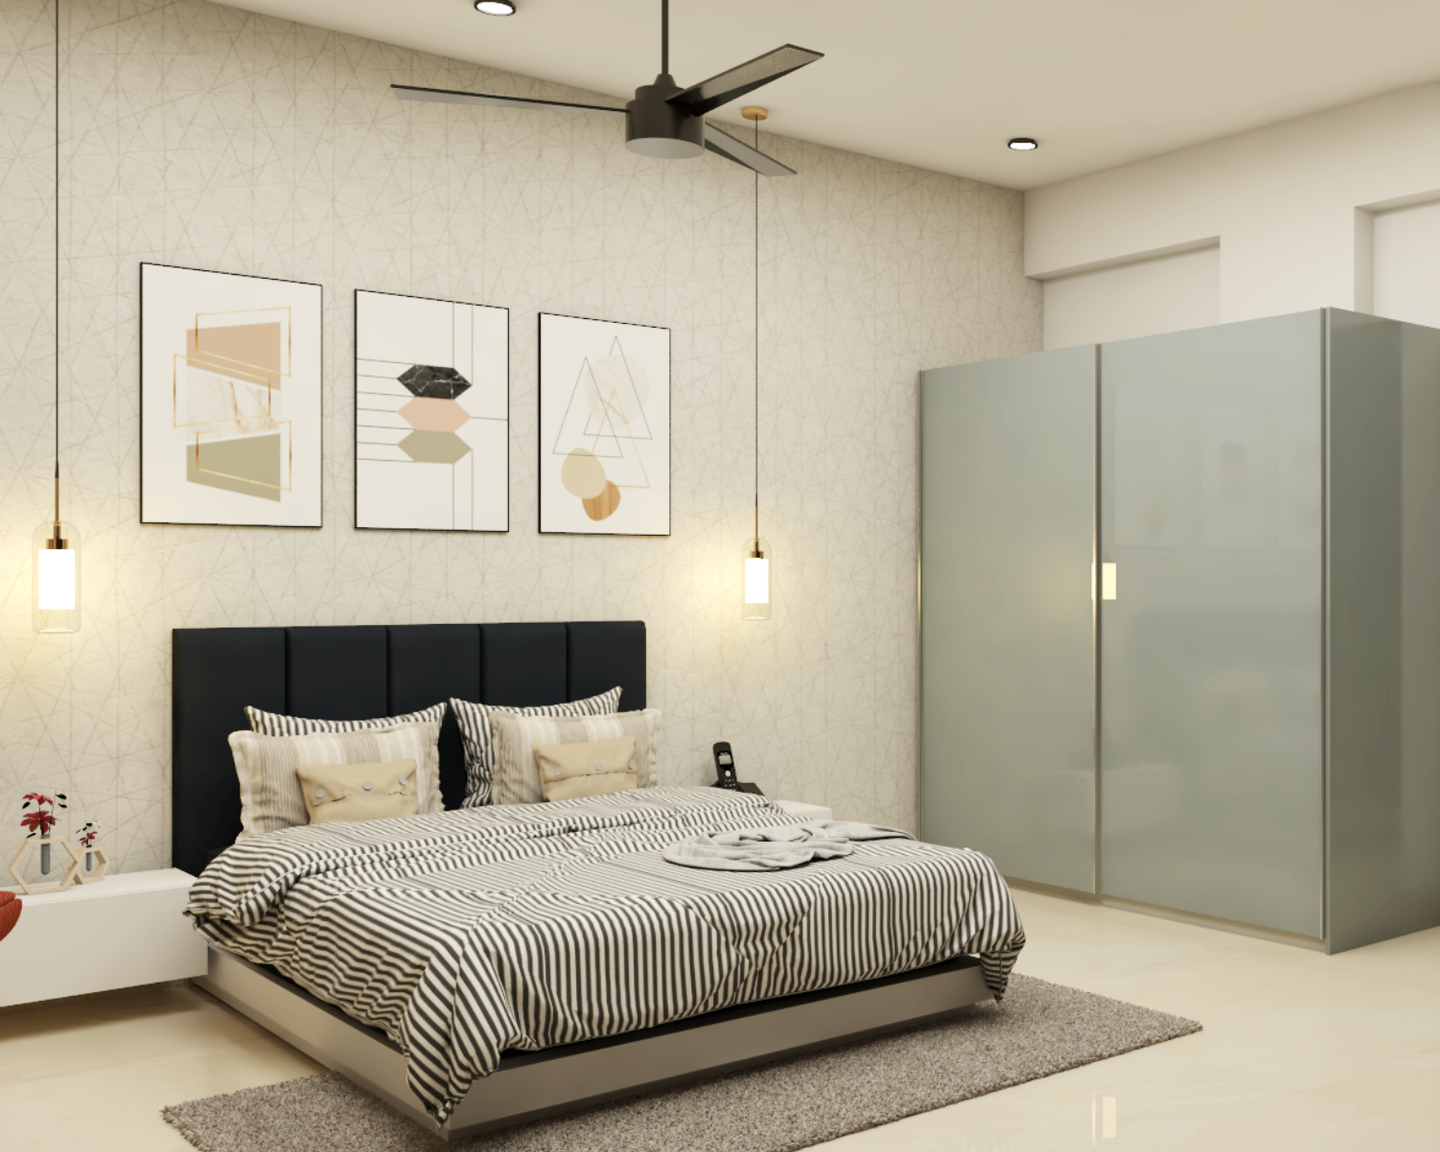 Bedroom with Black Headboard - Livspace